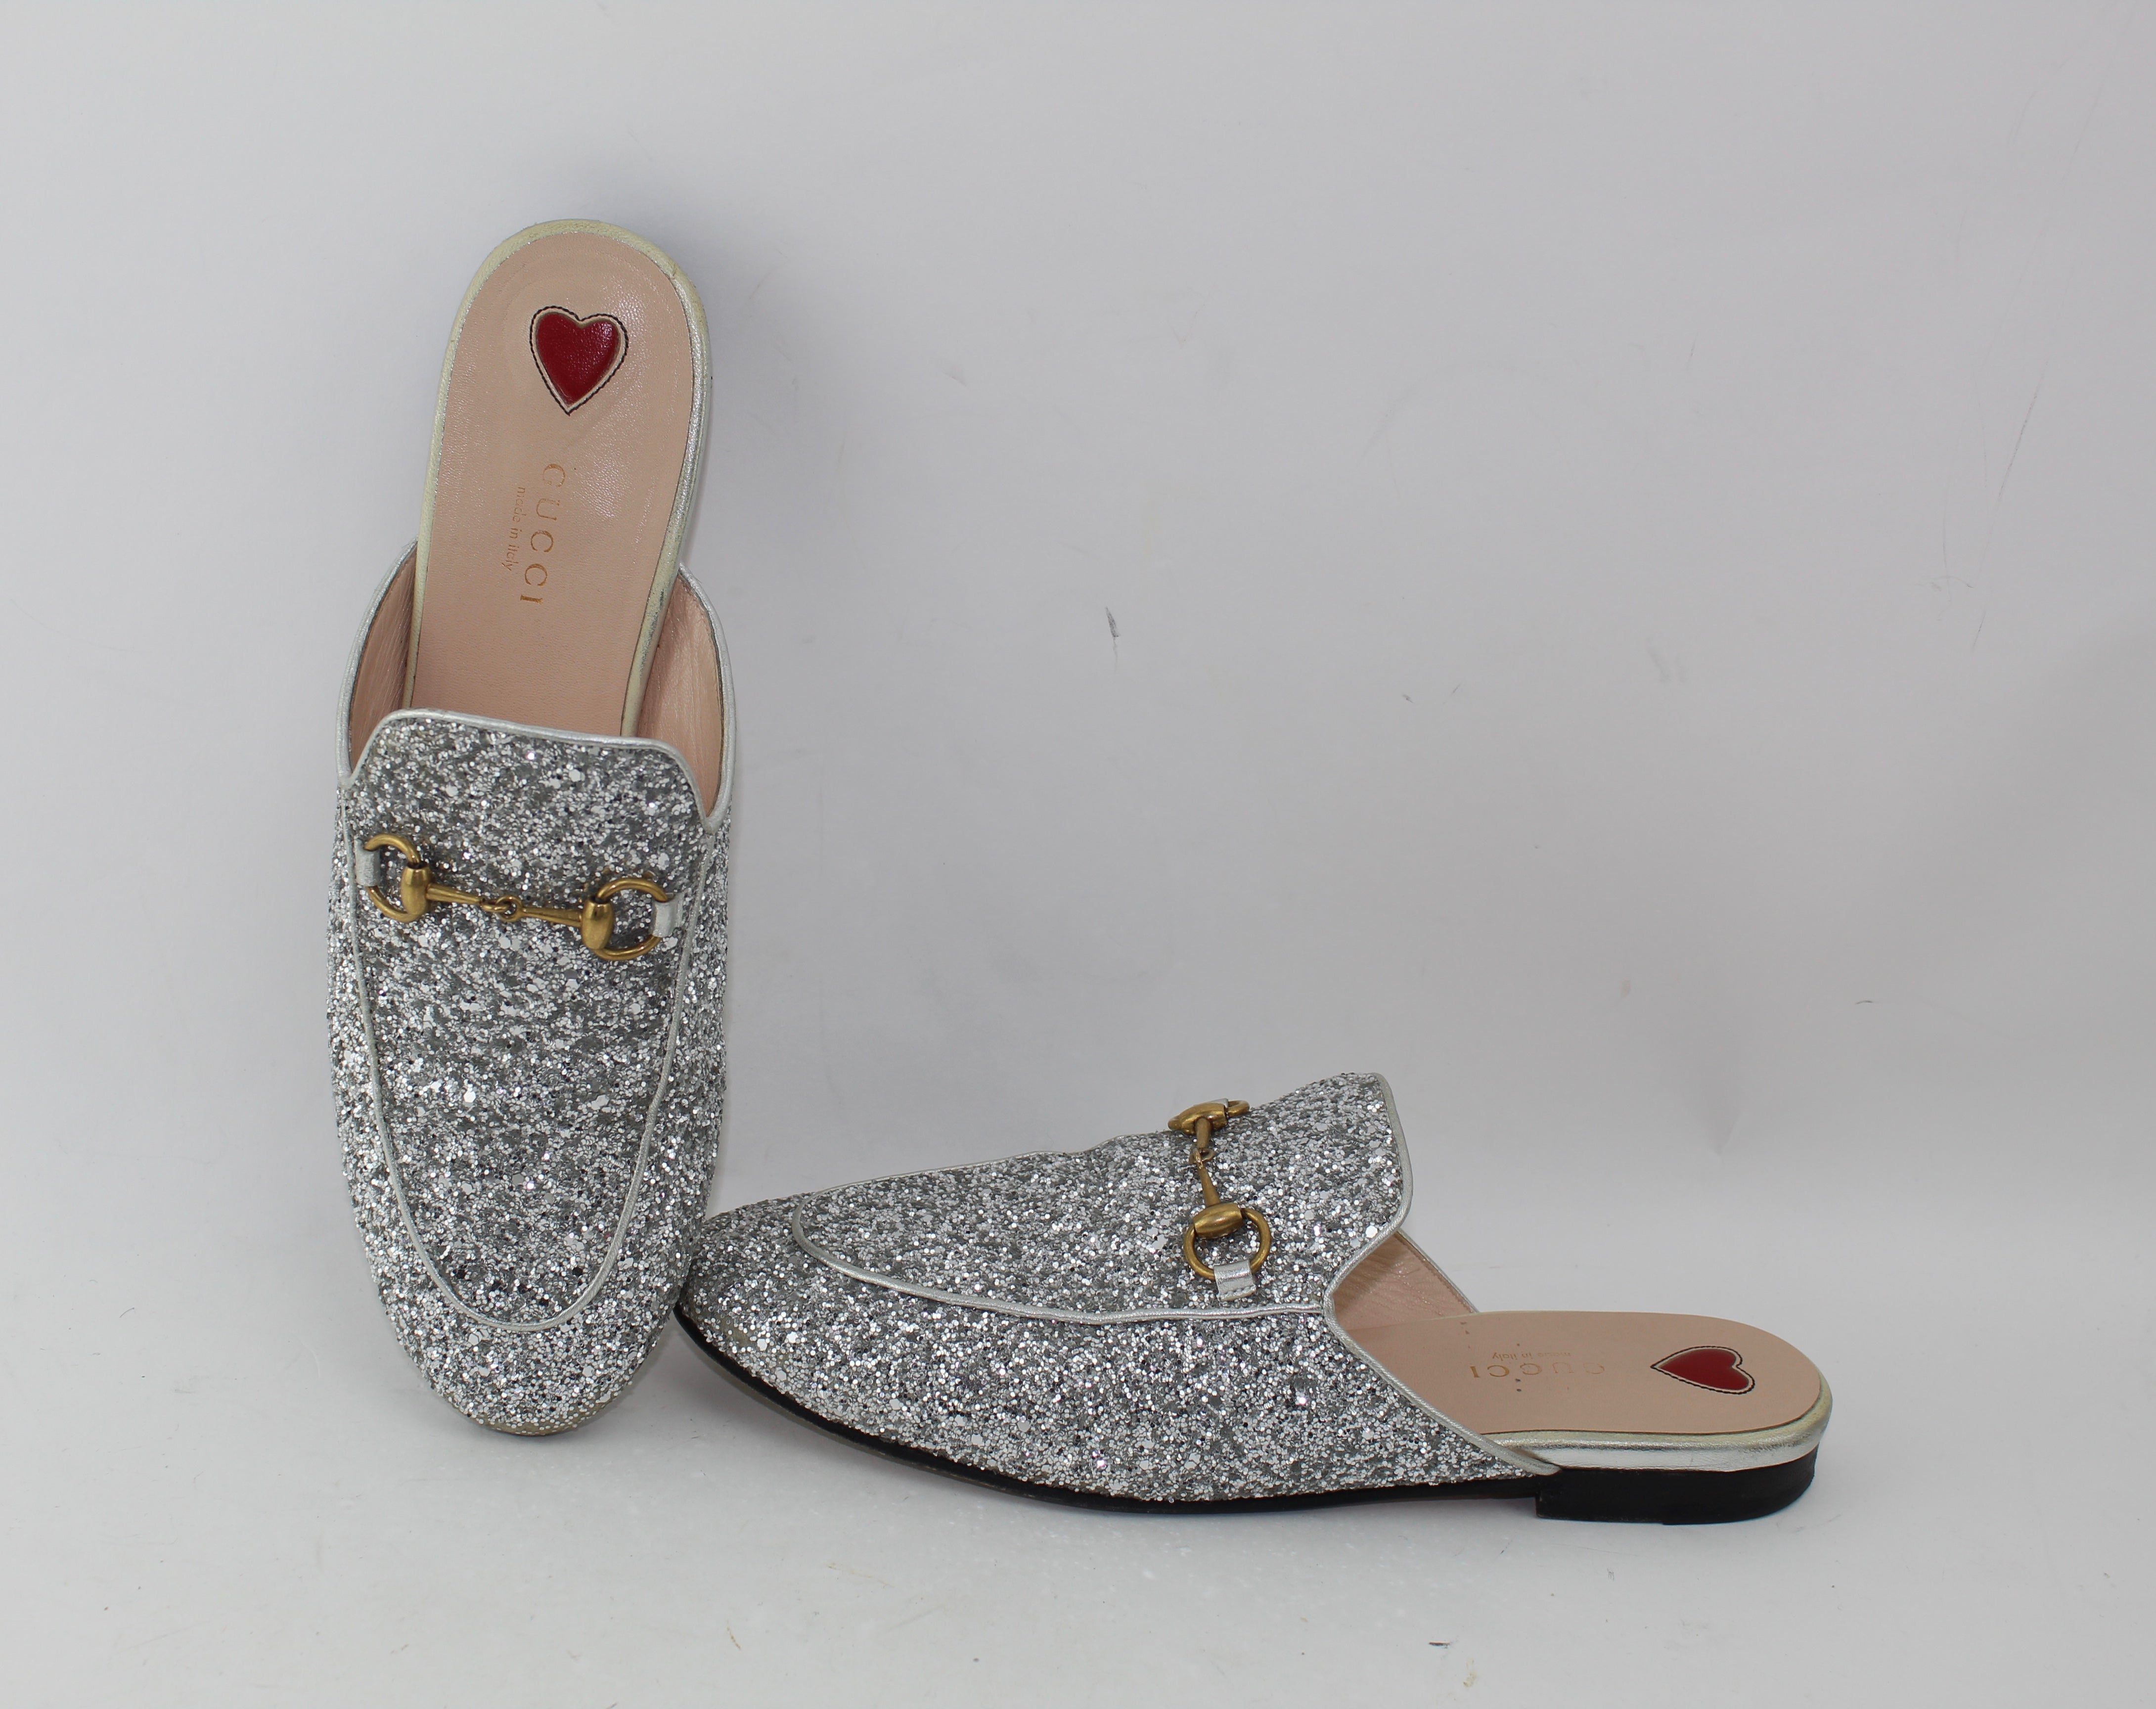 gucci princetown glitter slipper